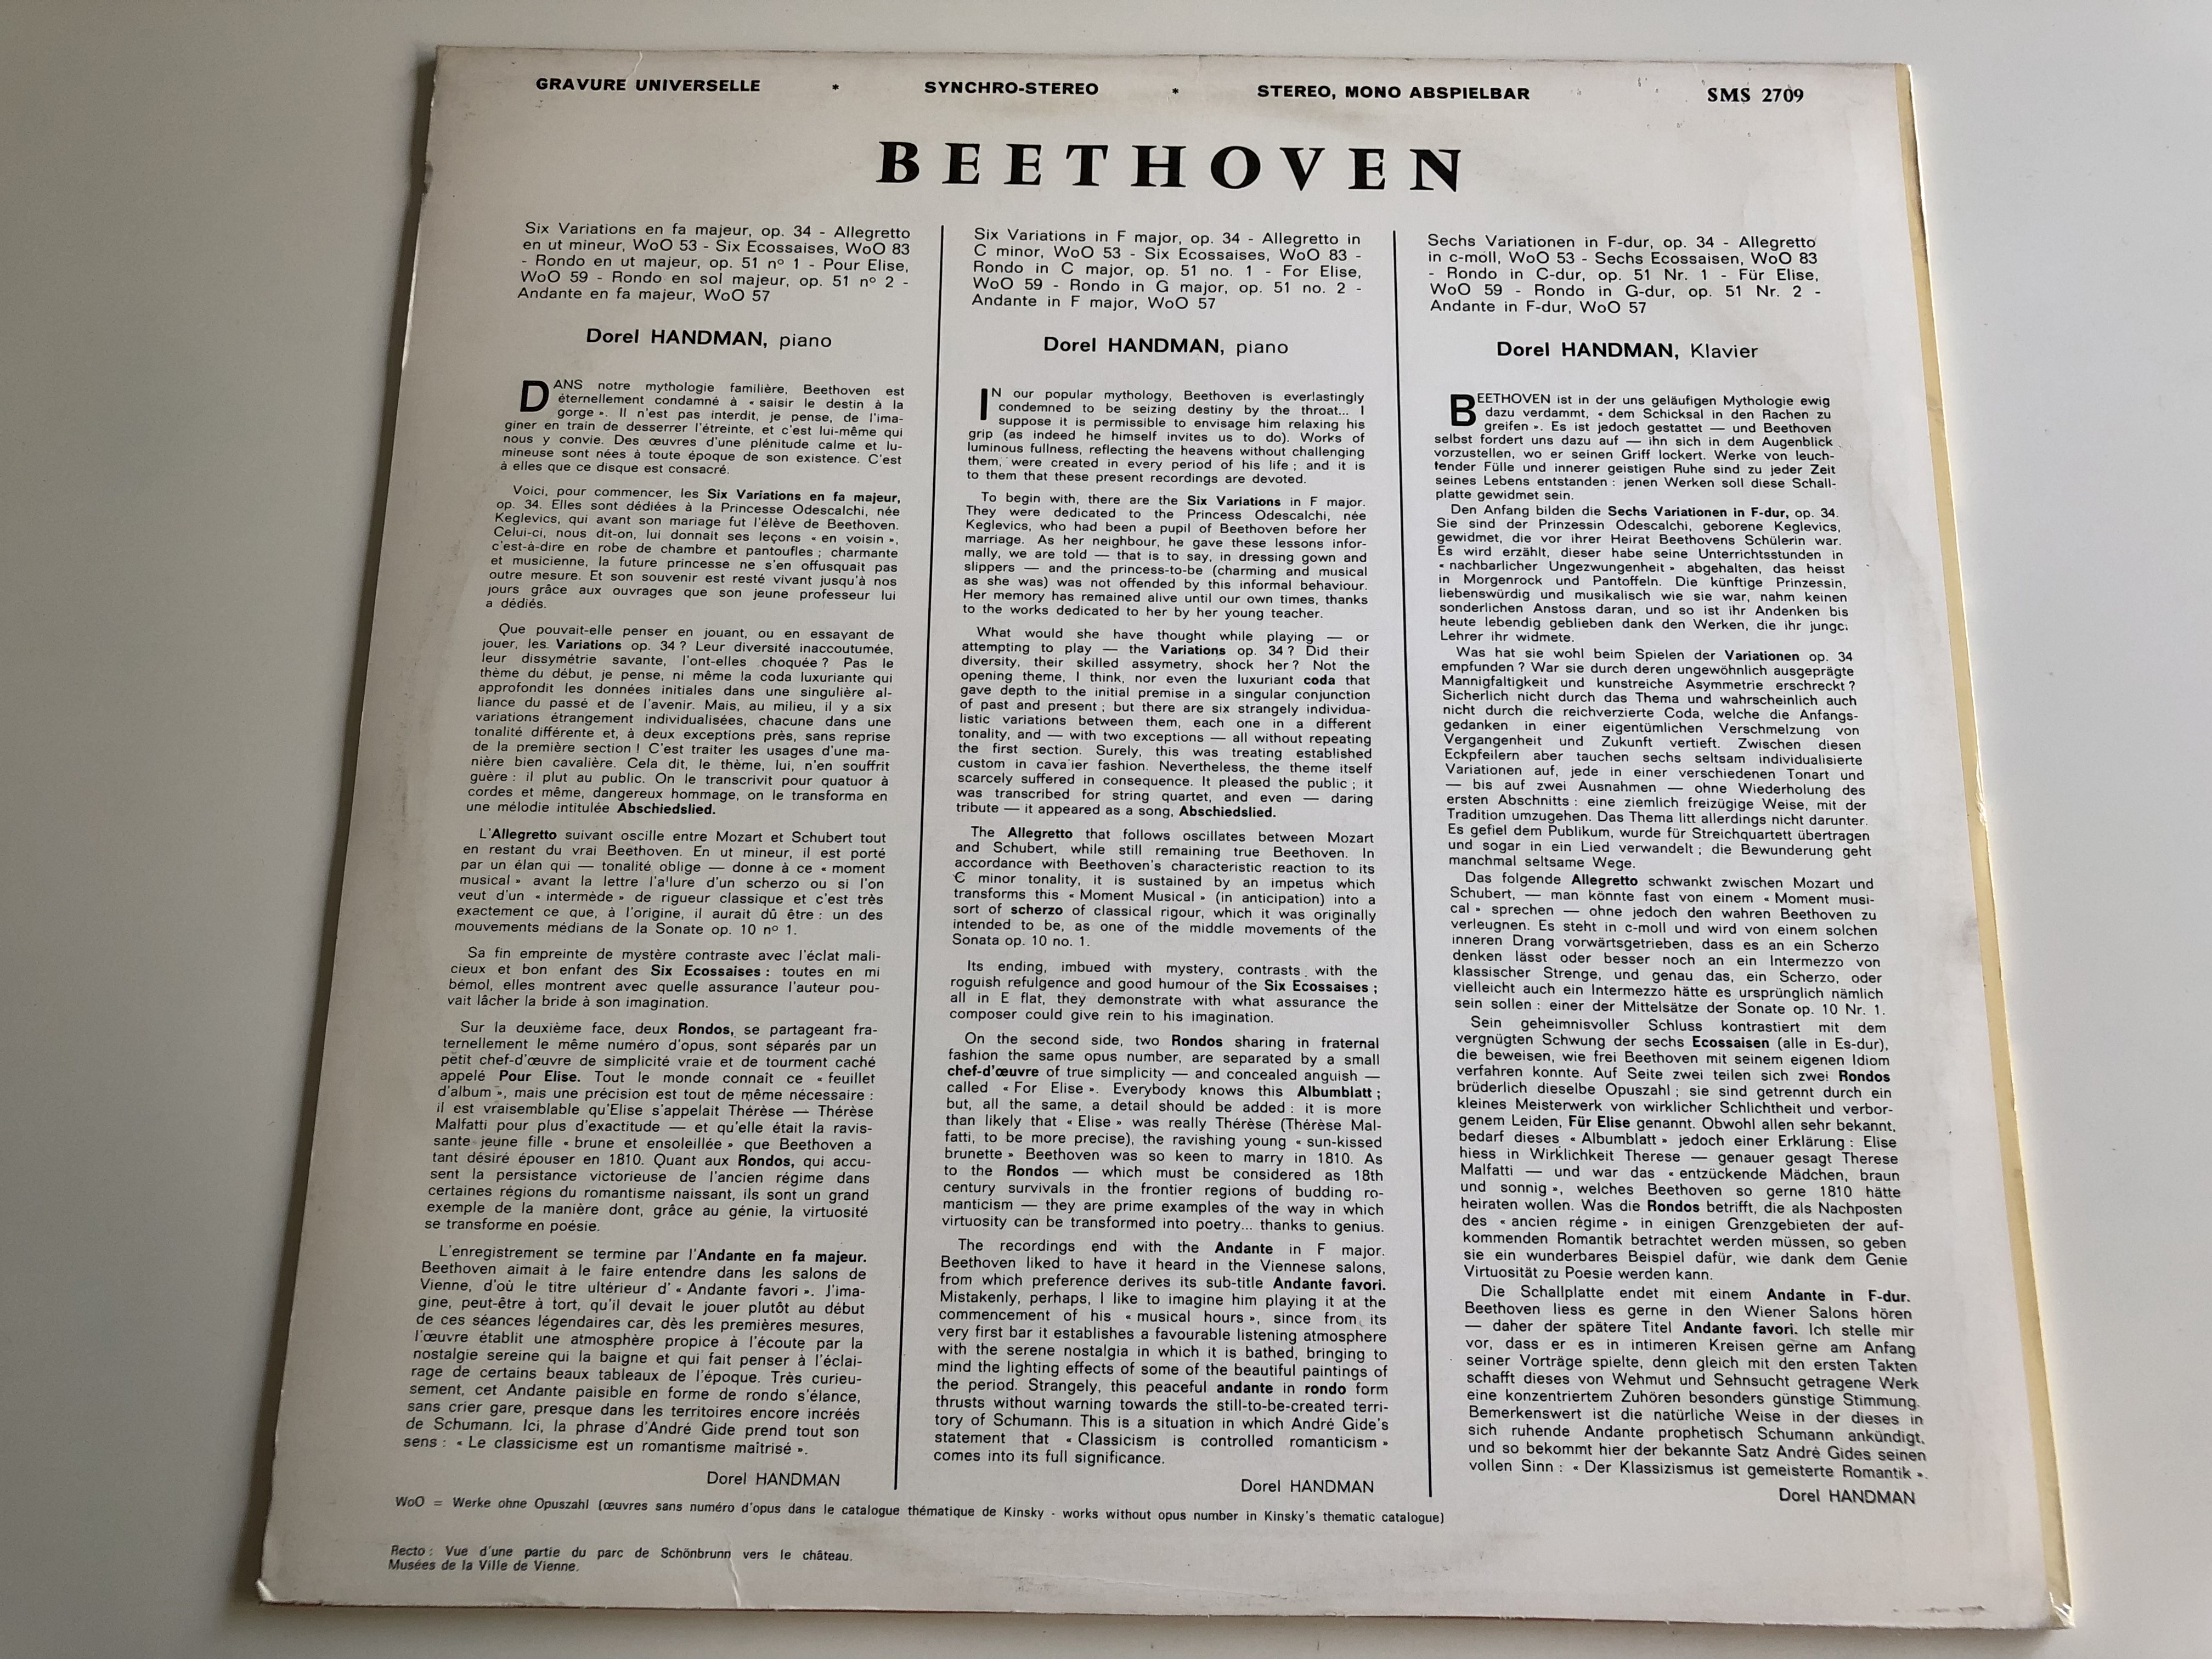 beethoven-recital-dorel-handman-piano-gravure-universelle-synchro-stereo-sms-2709-2-.jpg